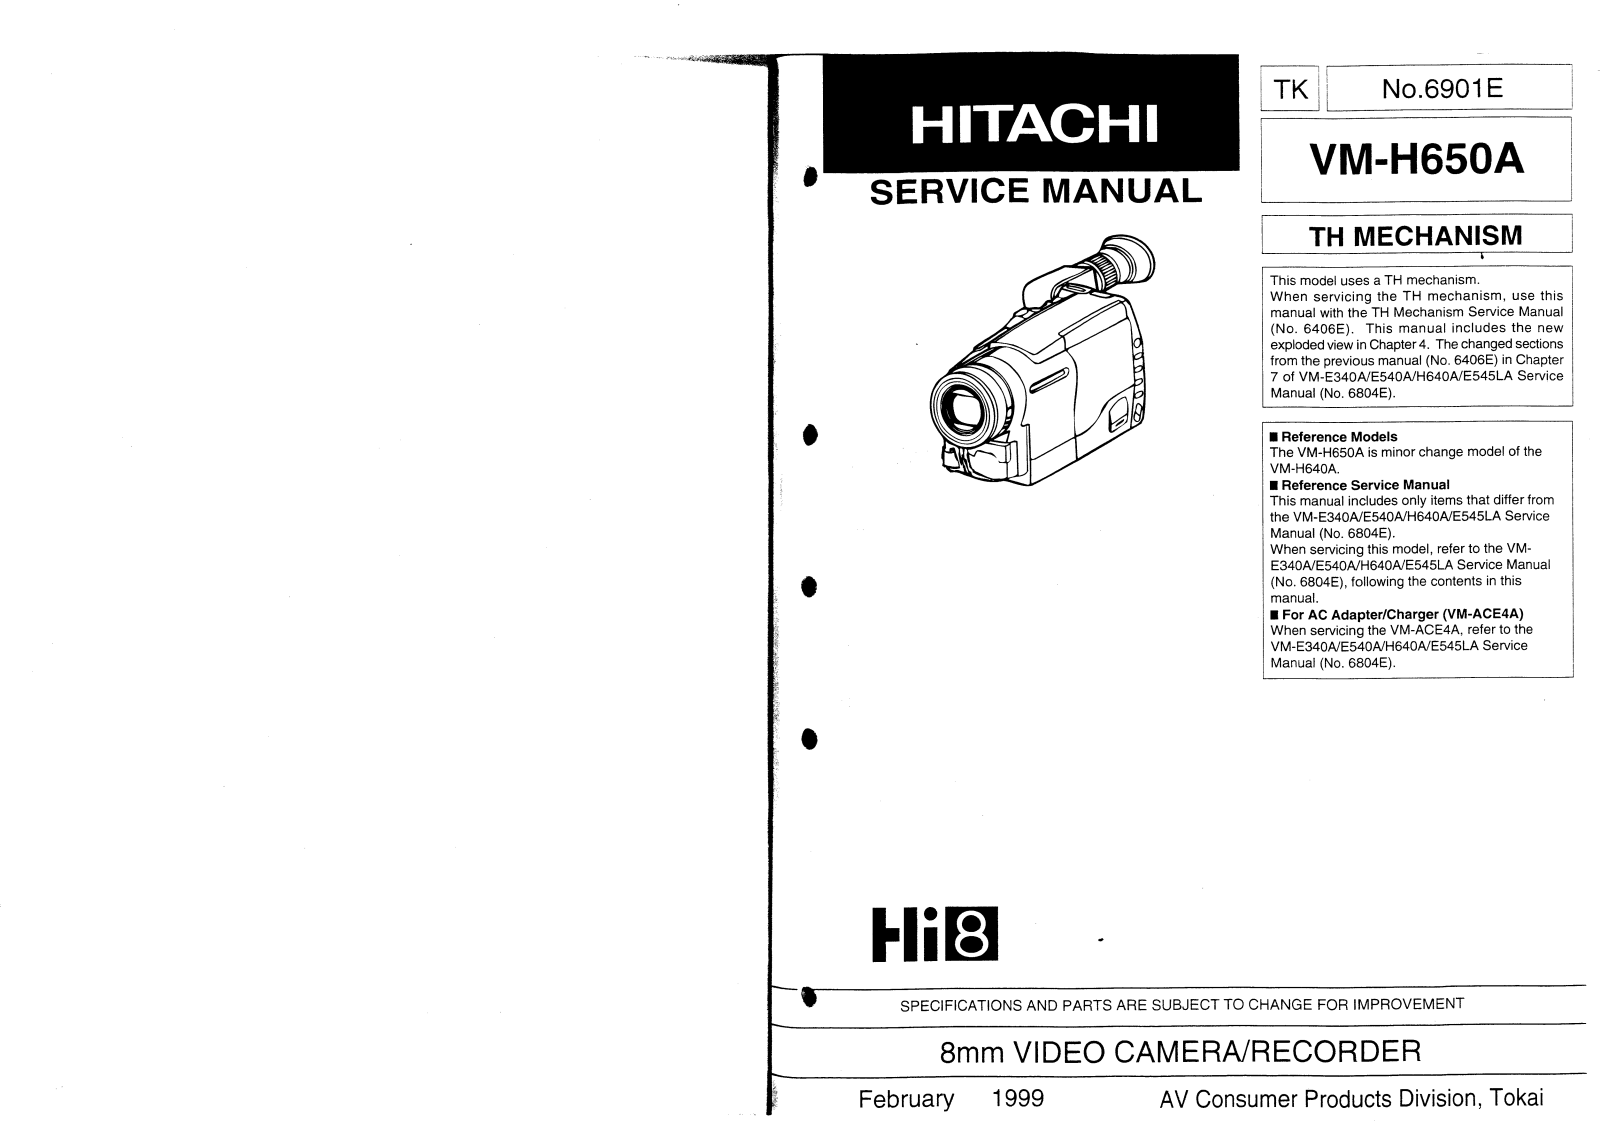 Hitachi VMH650A Service Manual